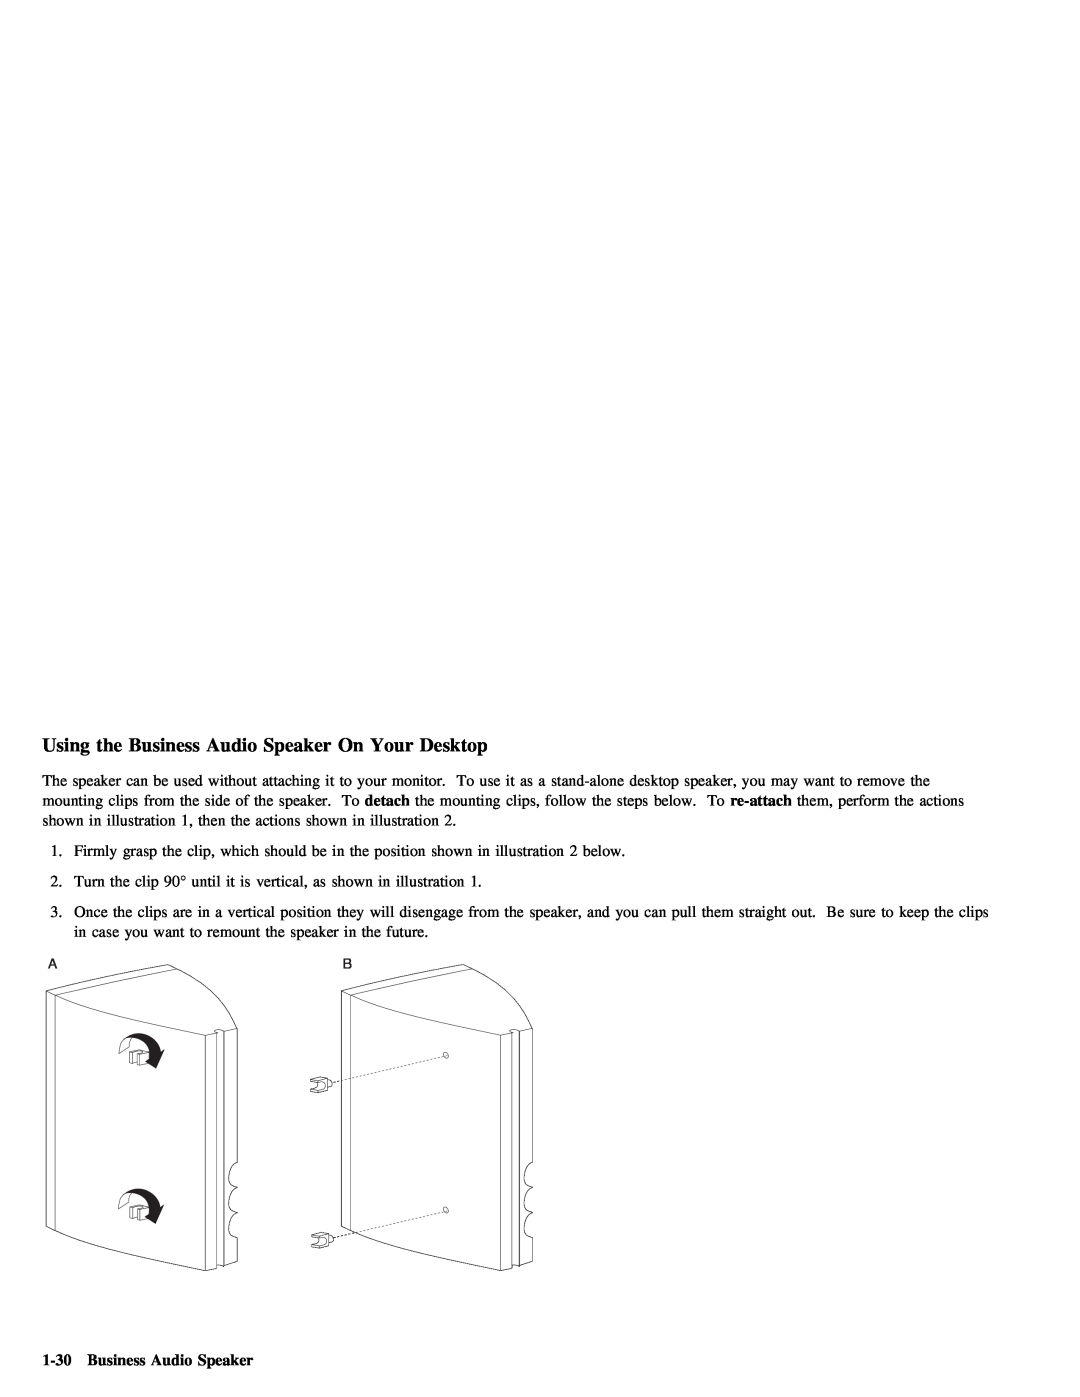 IBM 05L1596 manual 1-30Business Audio Speaker, Your, Using 